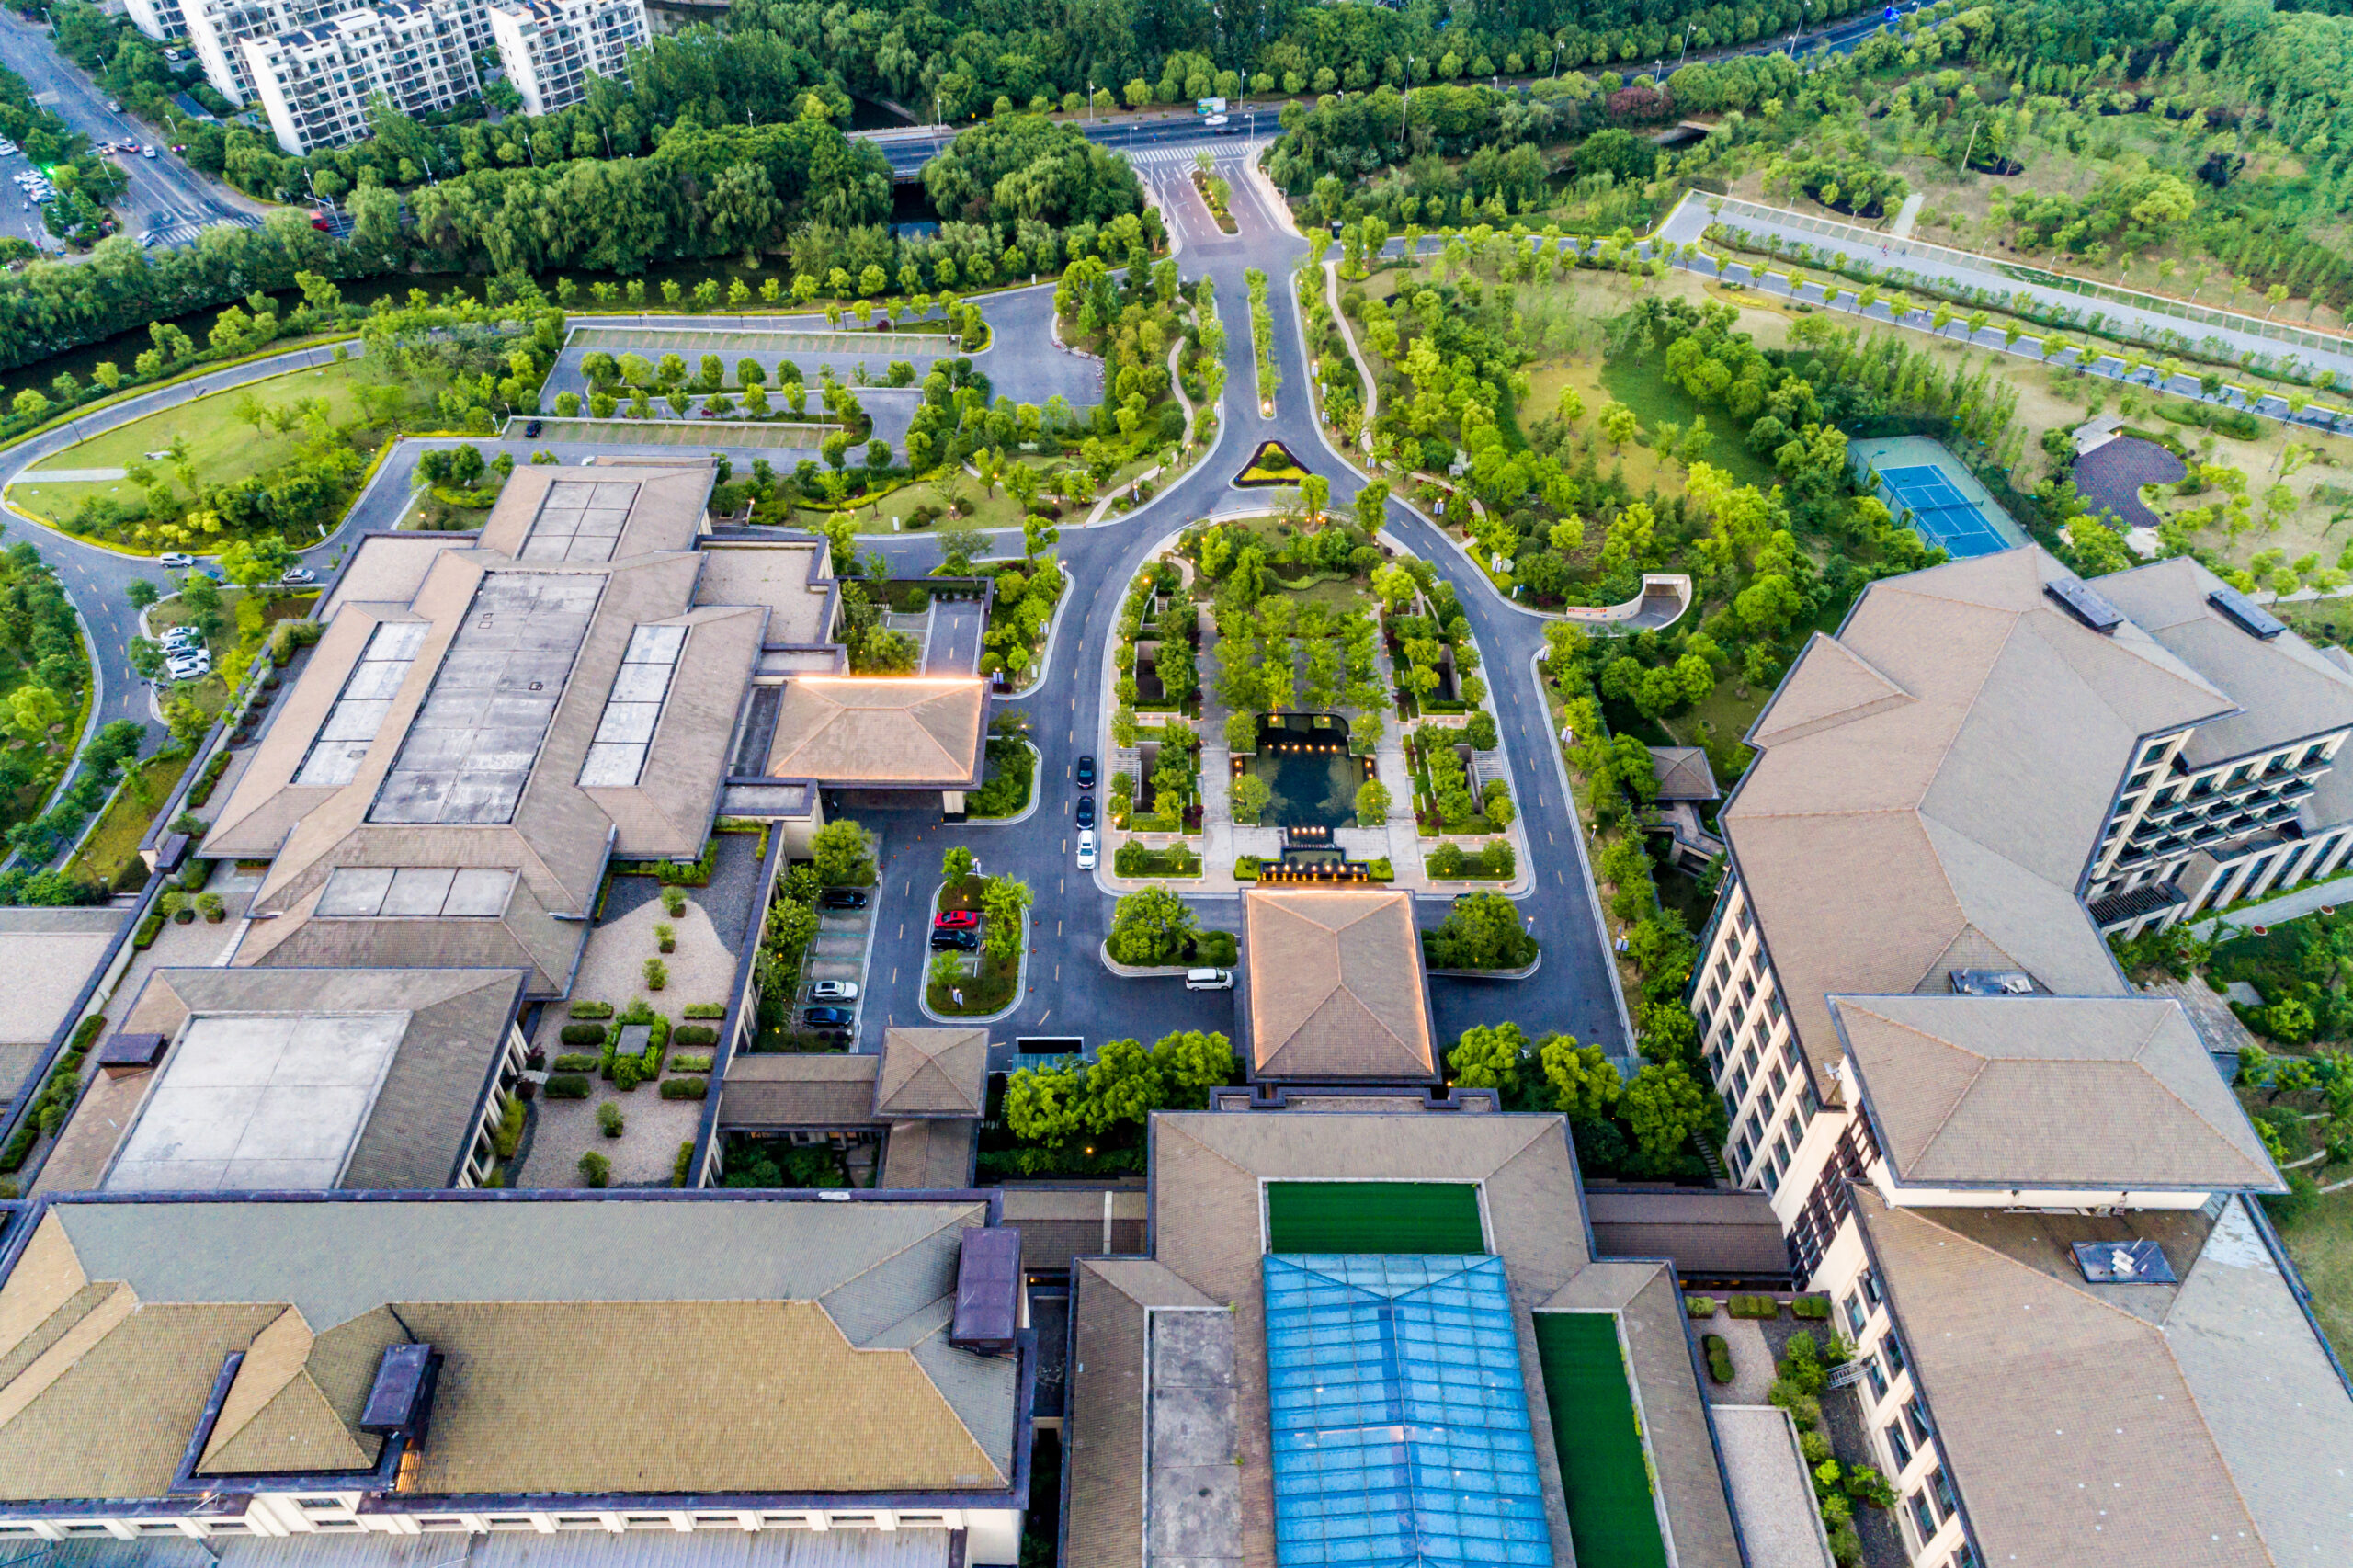 Subram Jade Gardens: A Jewel Among Bangalore's Top Real Estate Developments